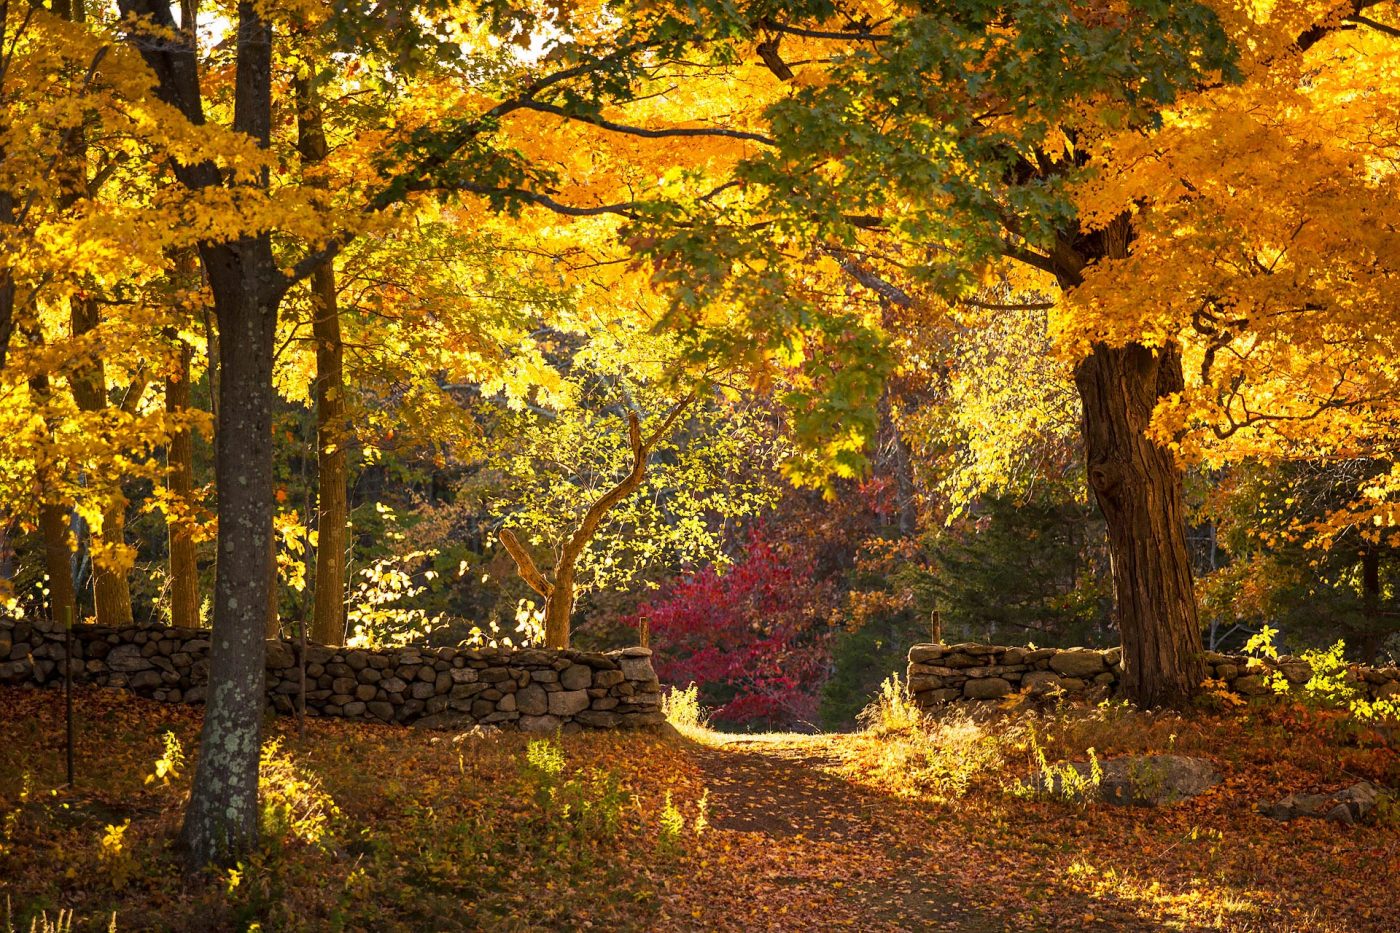 Fall colors at Weir Farm, Wilton CT